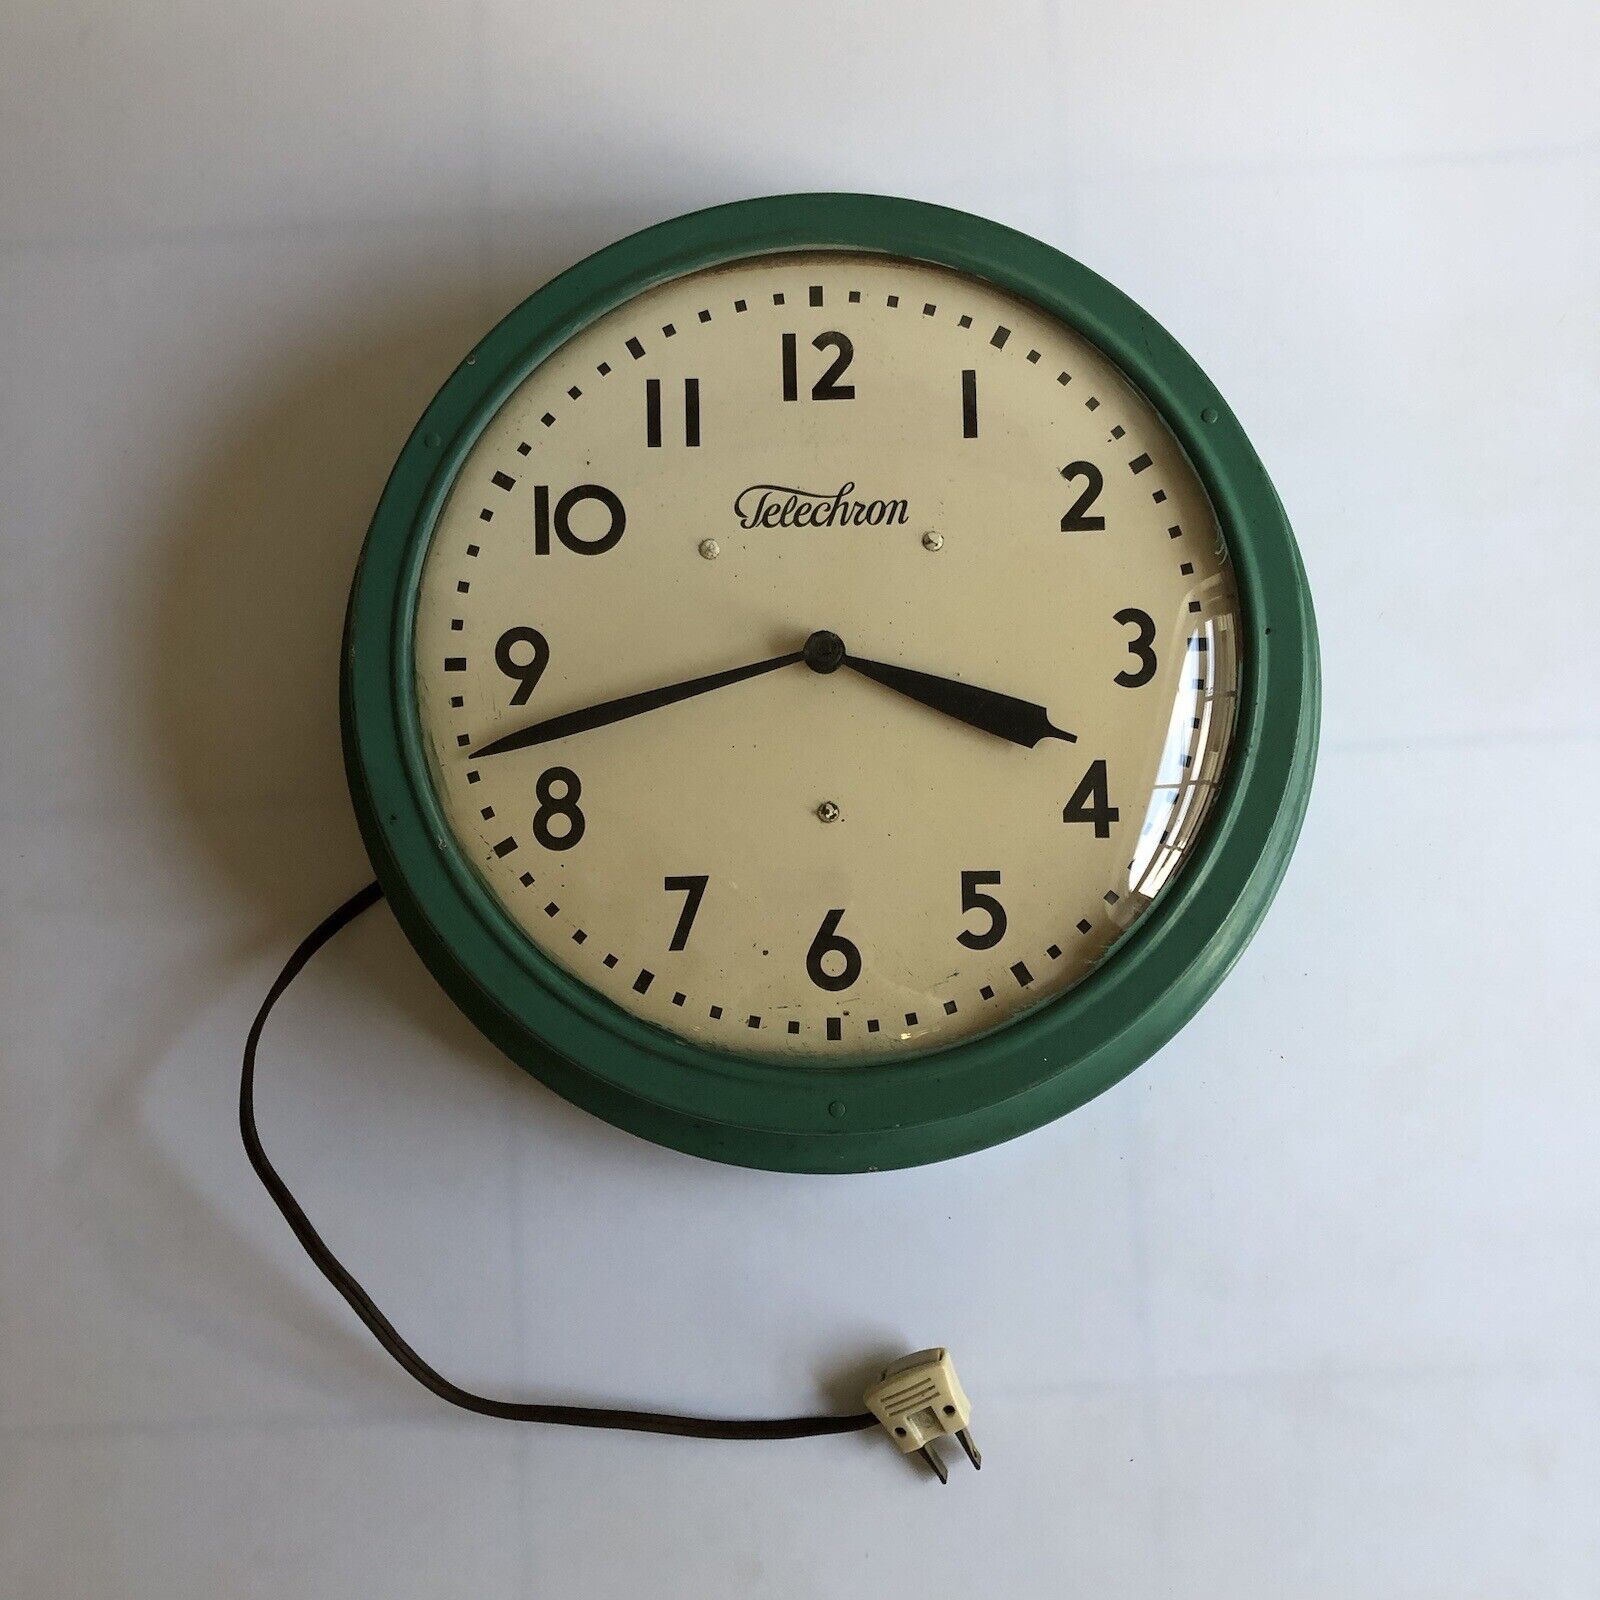 Works Vintage Warren Telechron Co. Wall Clock School Office Industrial